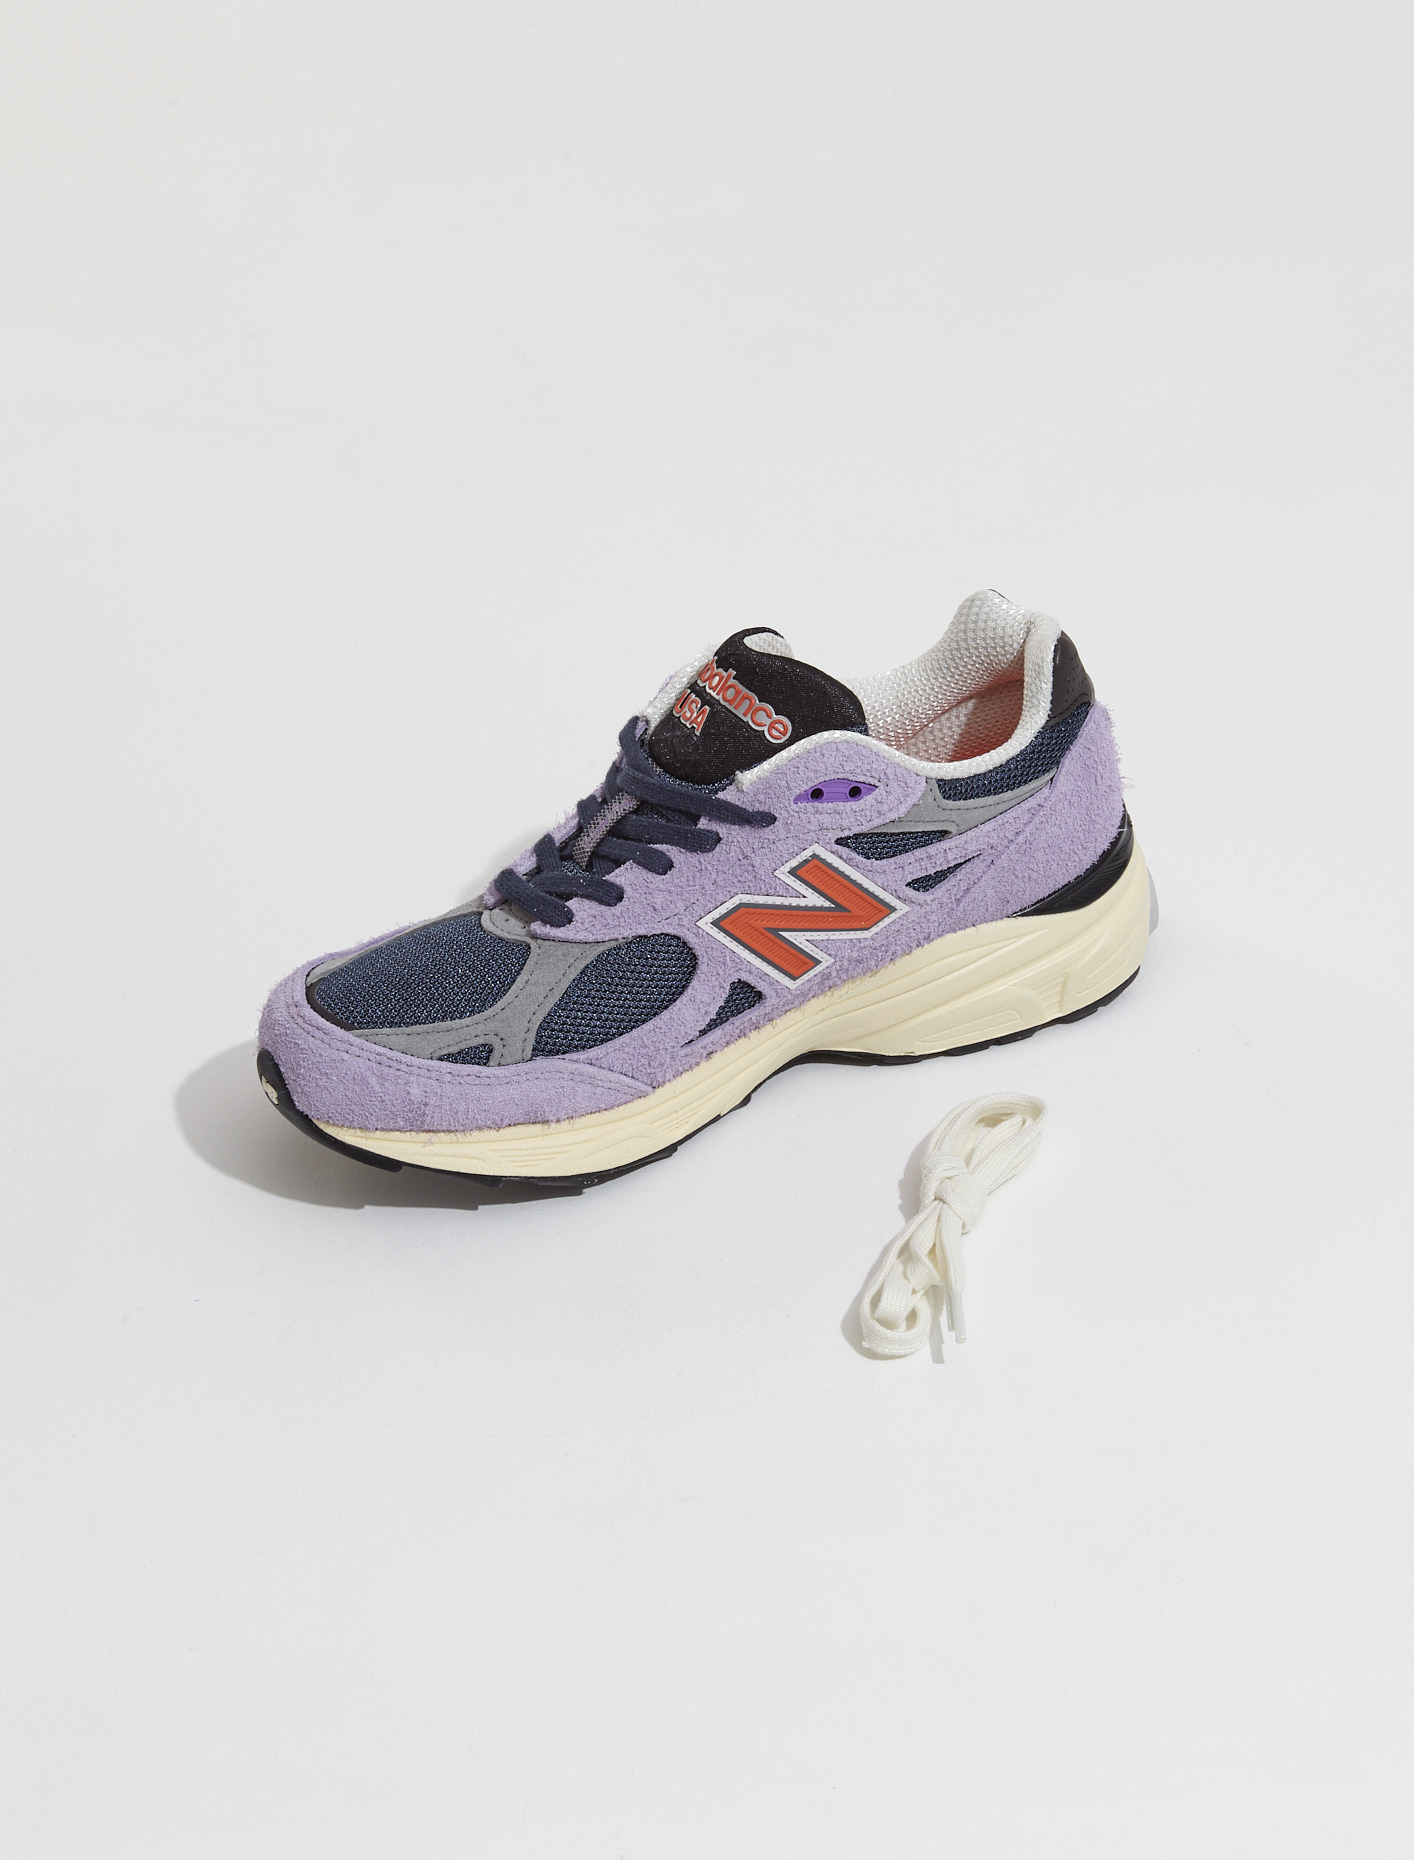 New Balance 990 v3 'MiUSA by Teddy Santis' Sneaker in Purple | Voo ...